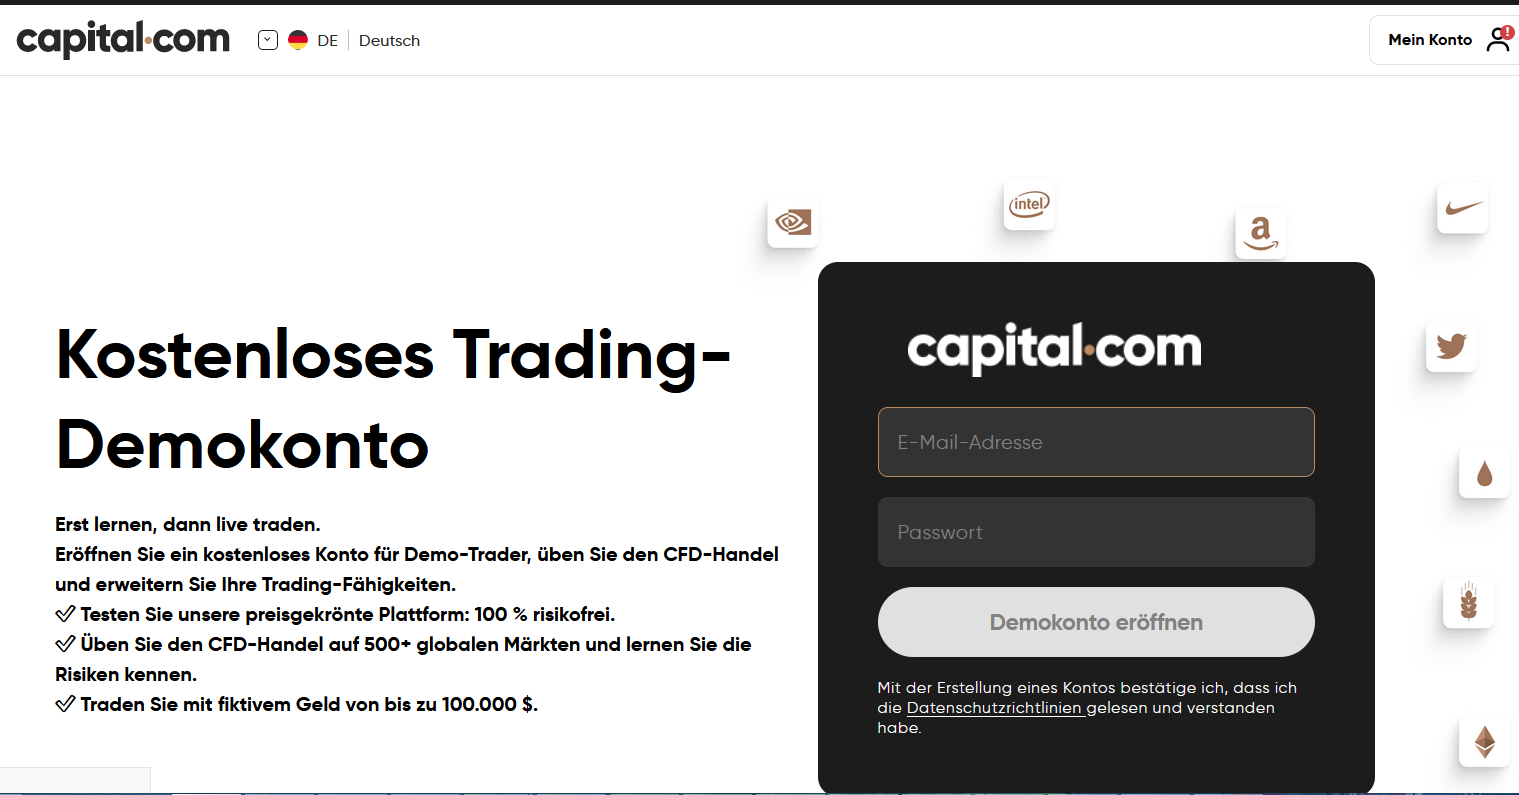 Capital.com Website mit Trading Demokonto Eröffnung